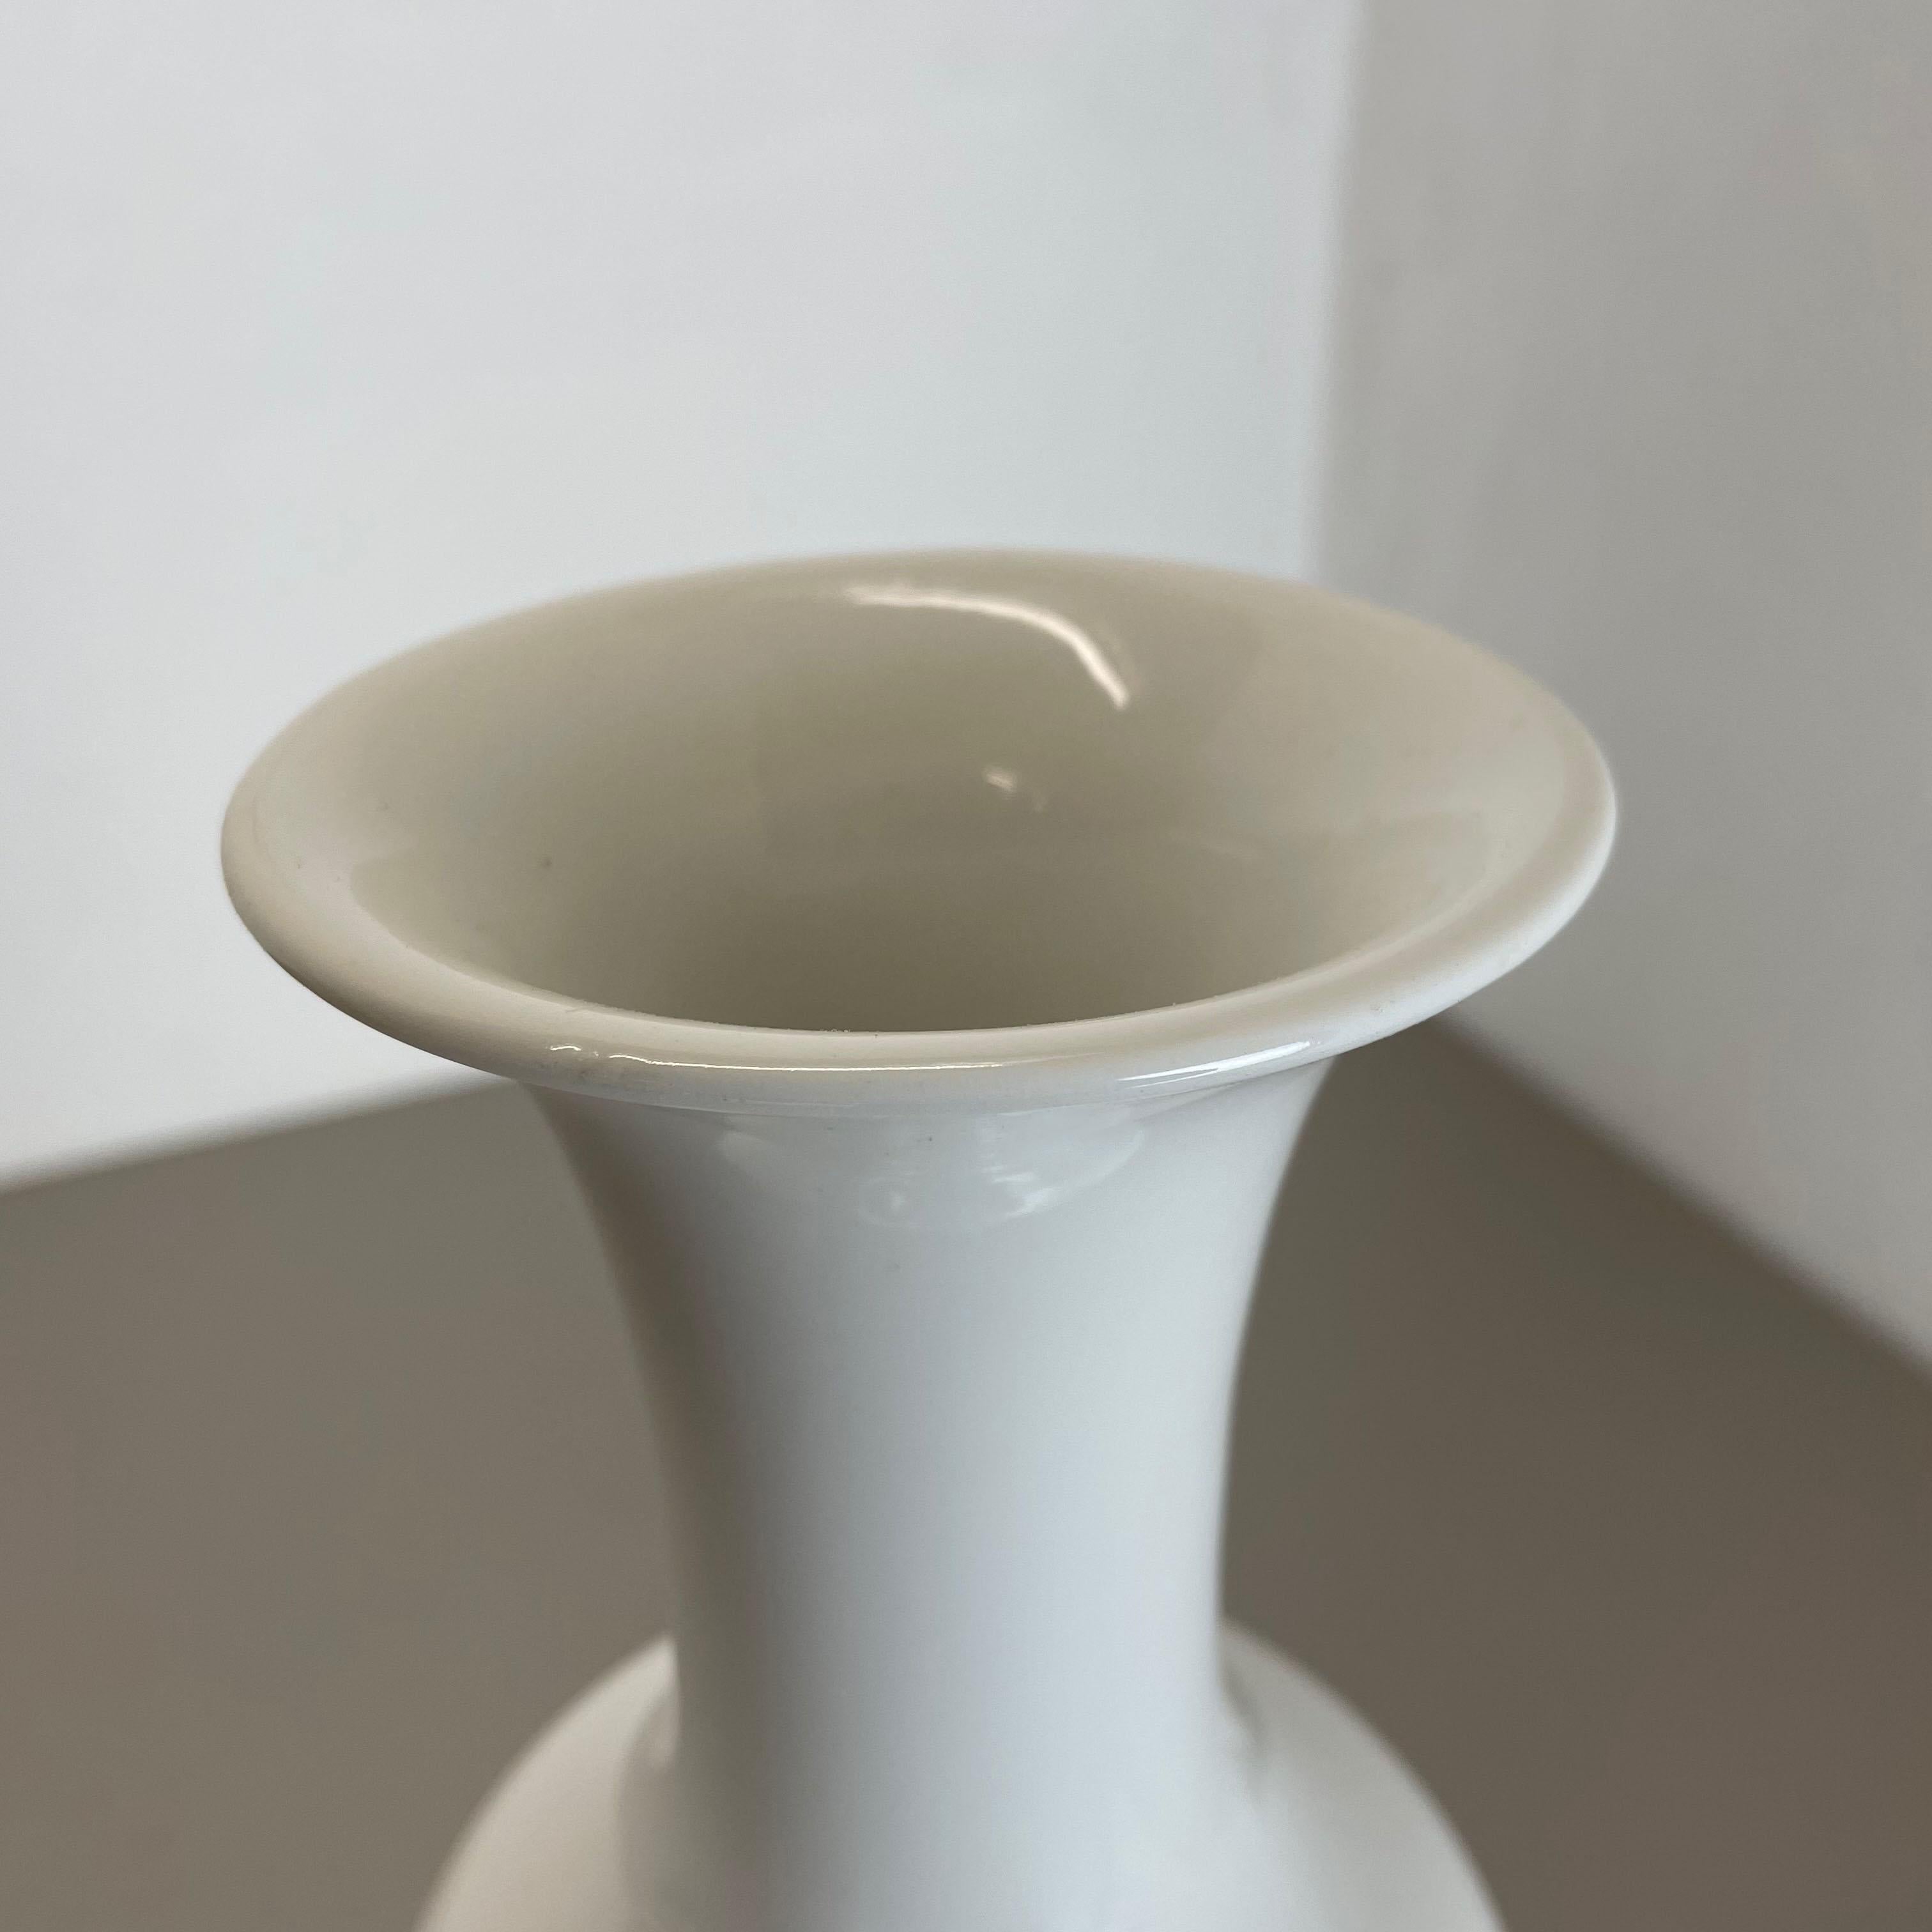 Small Op Art Vase Porcelain German Vase by KPM Berlin Ceramics Germany 1960 For Sale 4